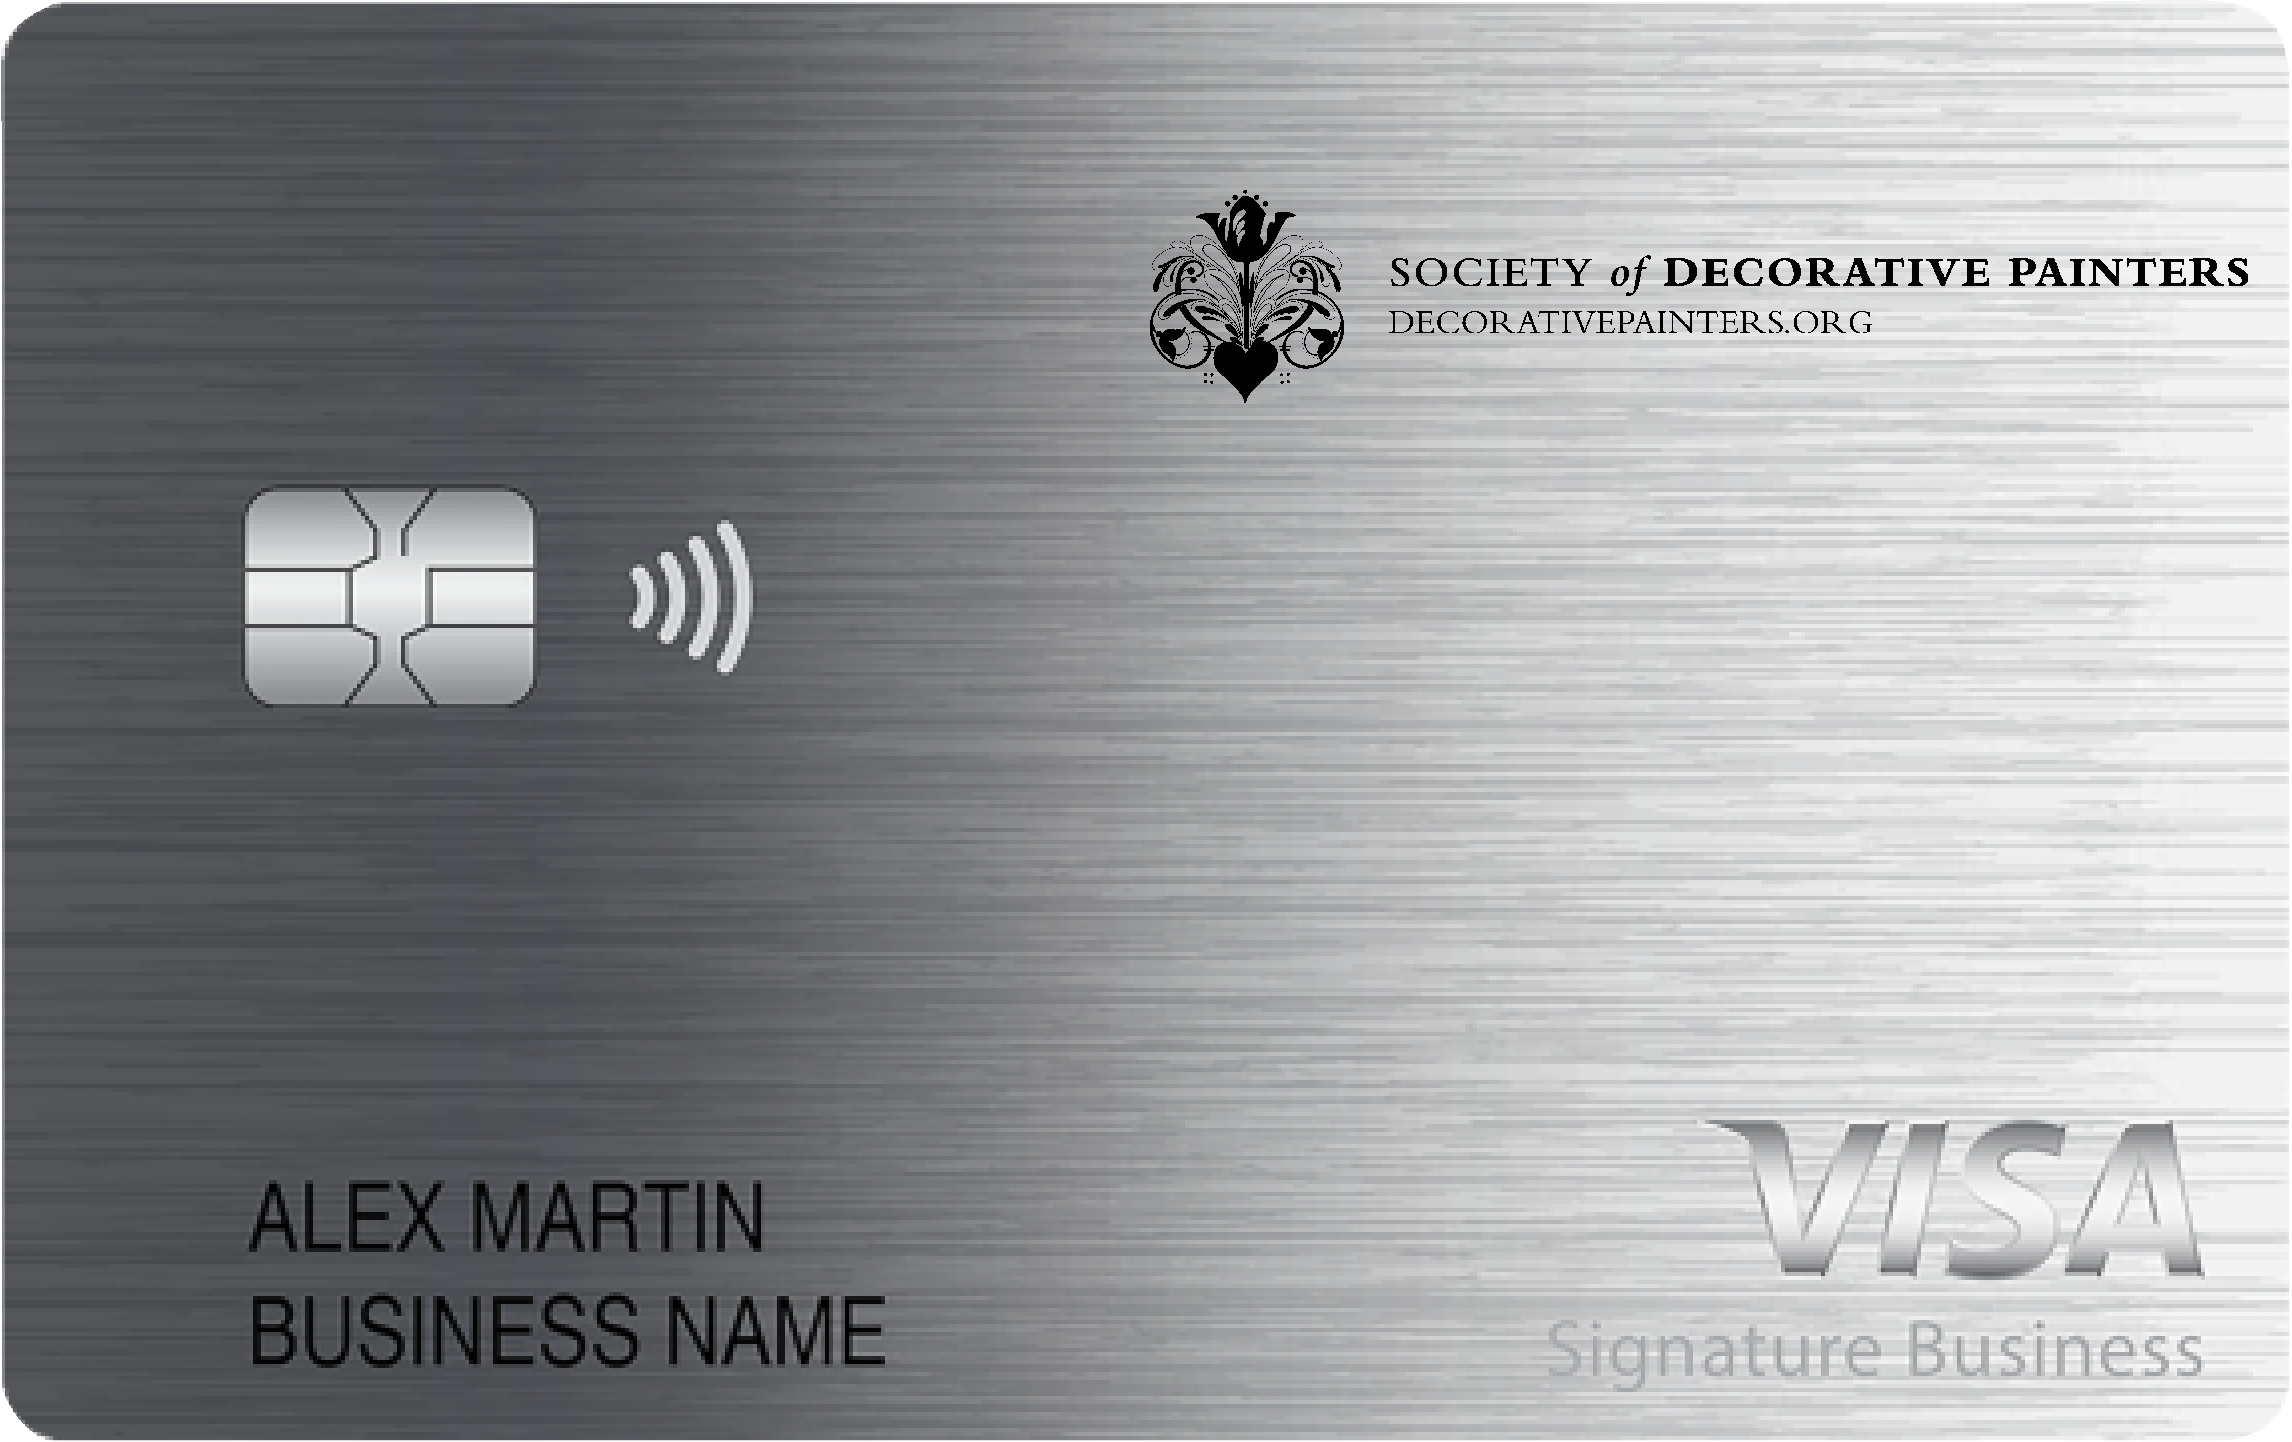 INTRUST Bank Society of Decorative Paint Smart Business Rewards Card